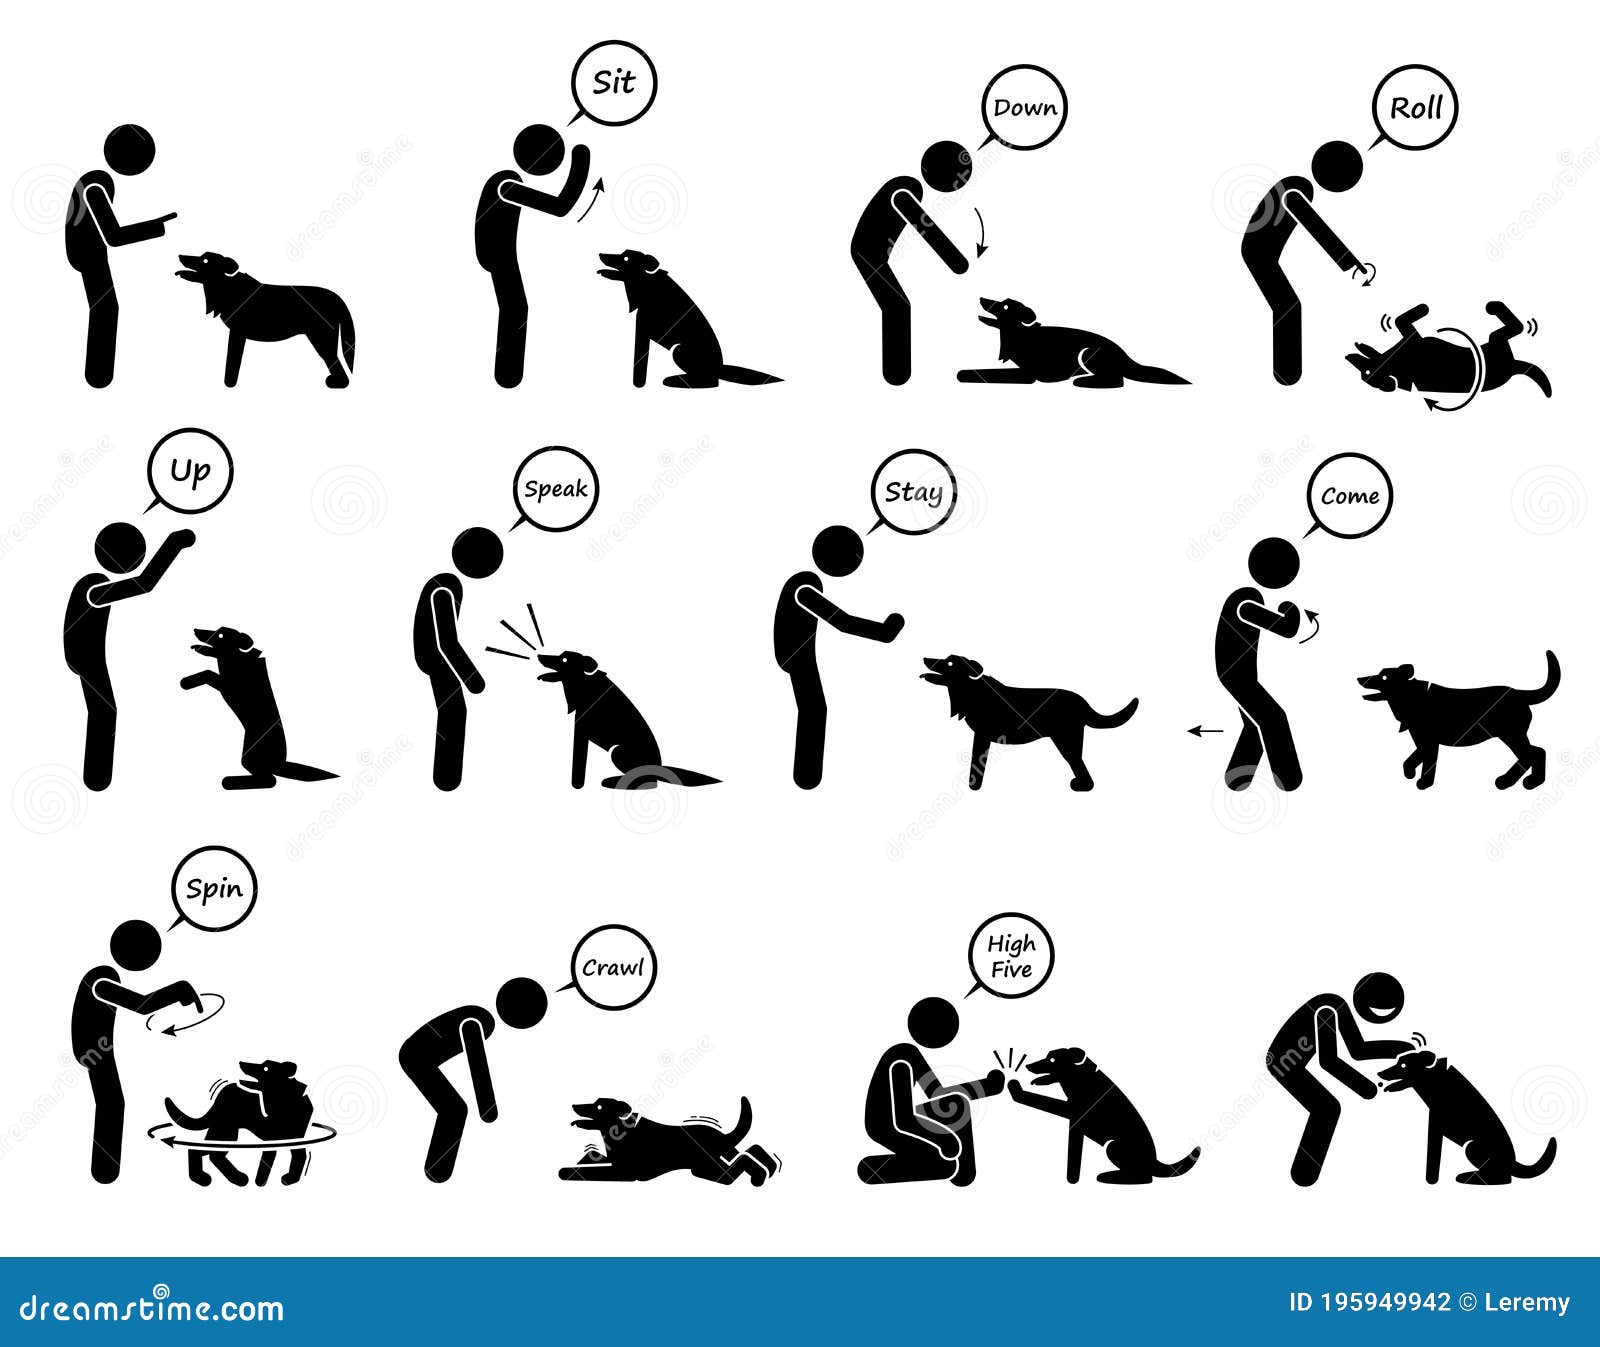 Basic Dog Commands And Behavioral Training Icons Set